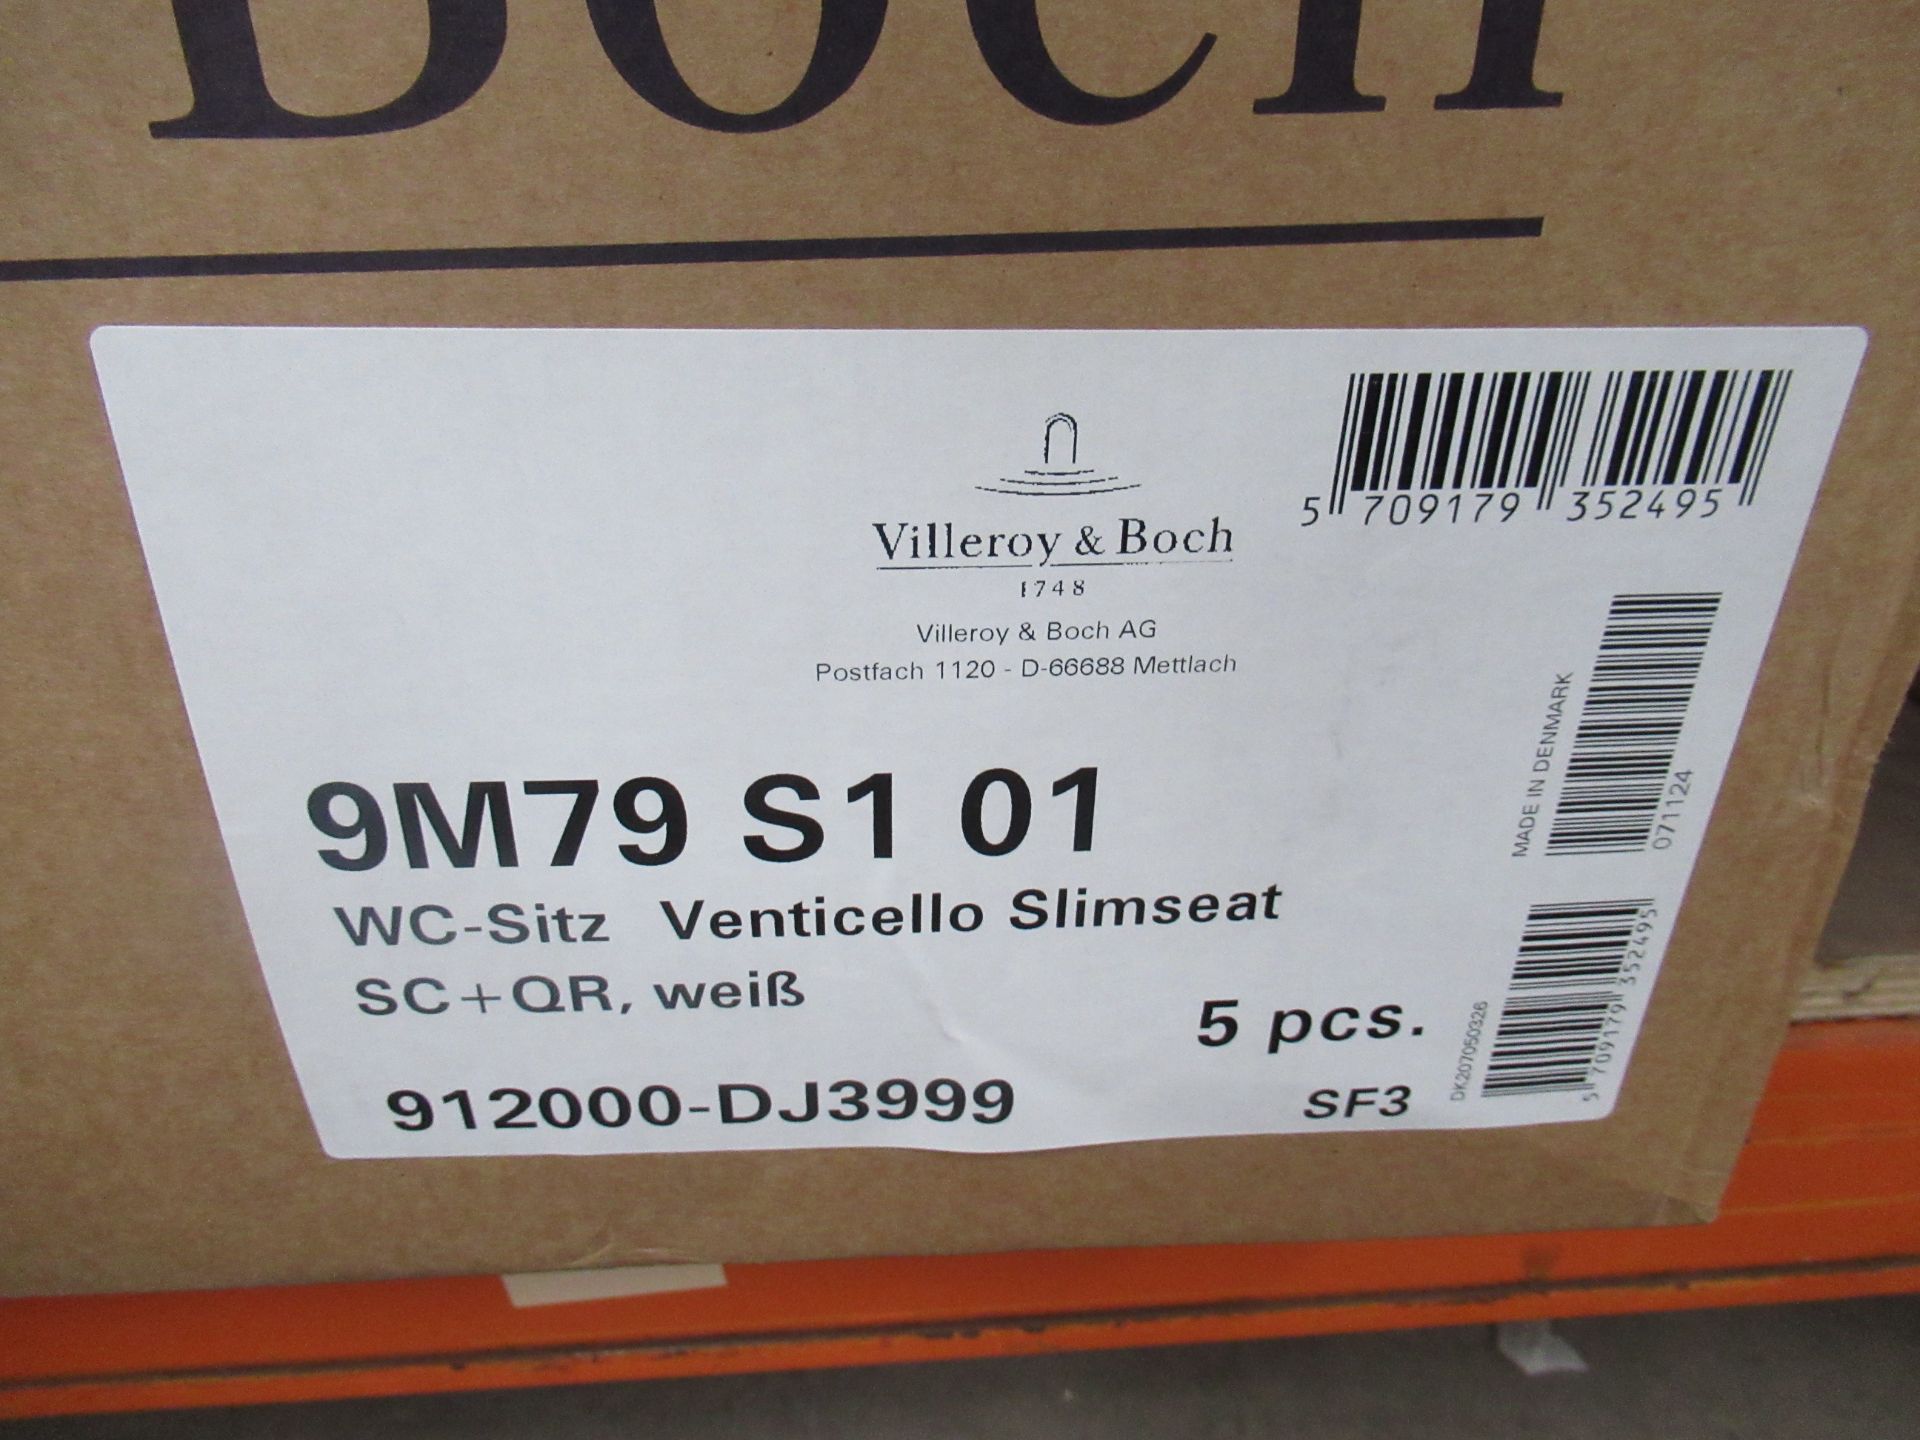 5 x Villeroy and Boch Toilet Seats, w.c-sitz venticello slimseat - Image 2 of 3